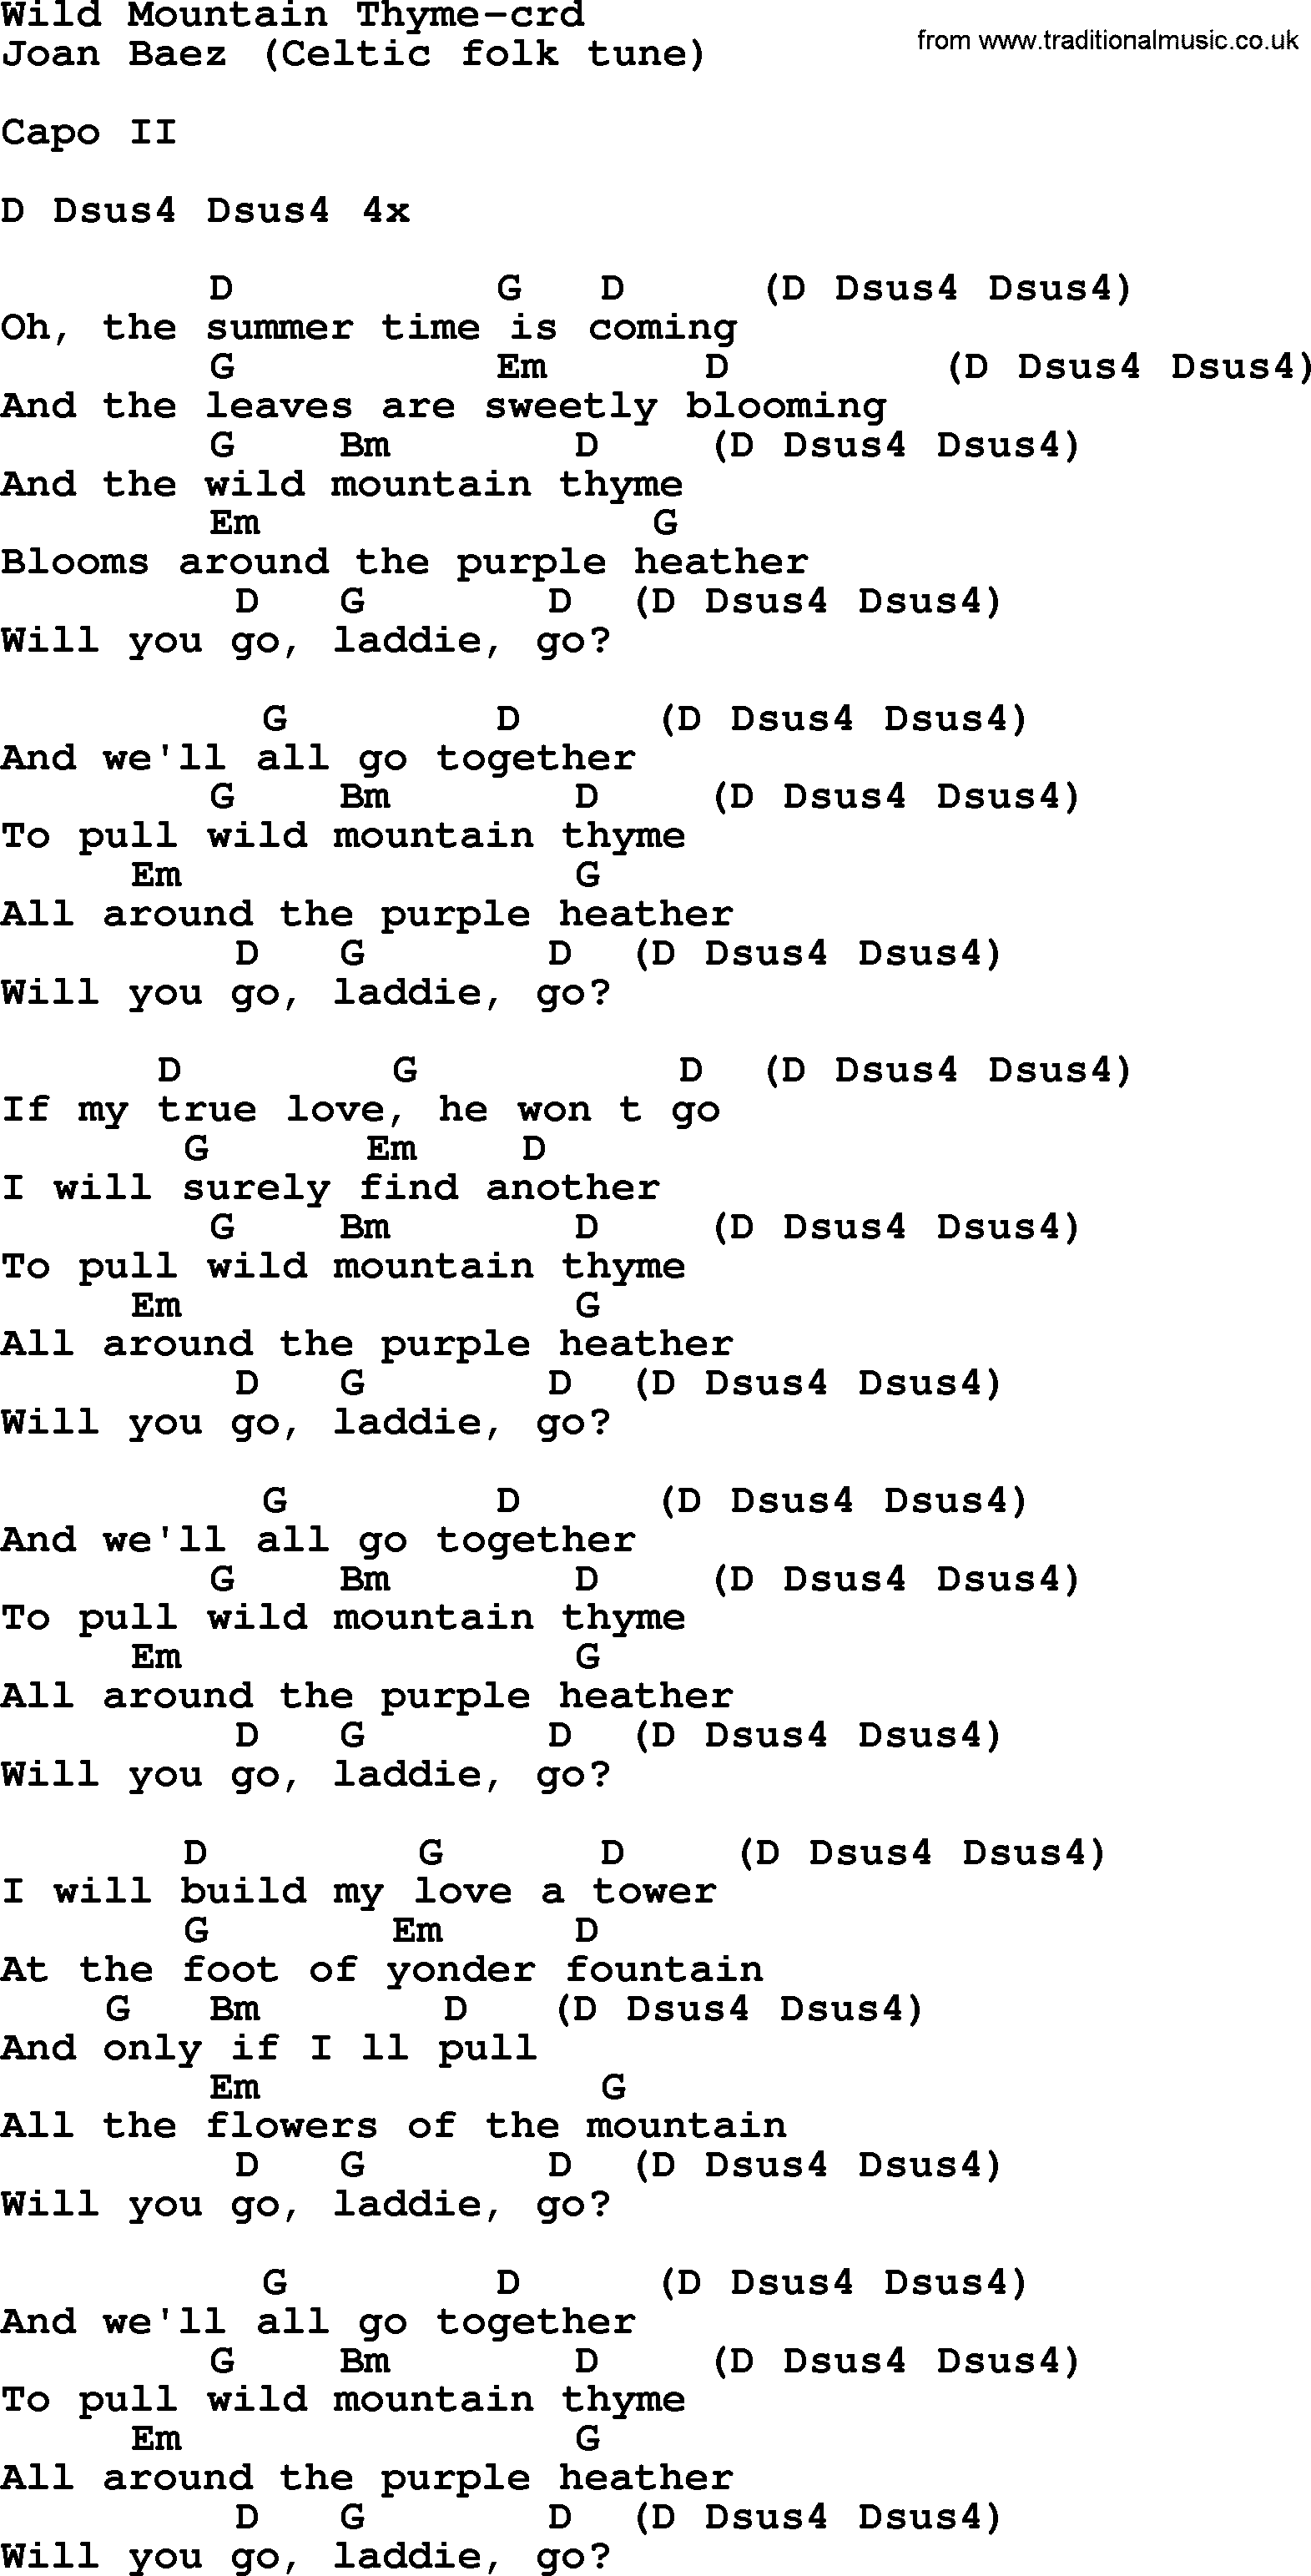 Joan Baez song Wild Mountain Thyme lyrics and chords